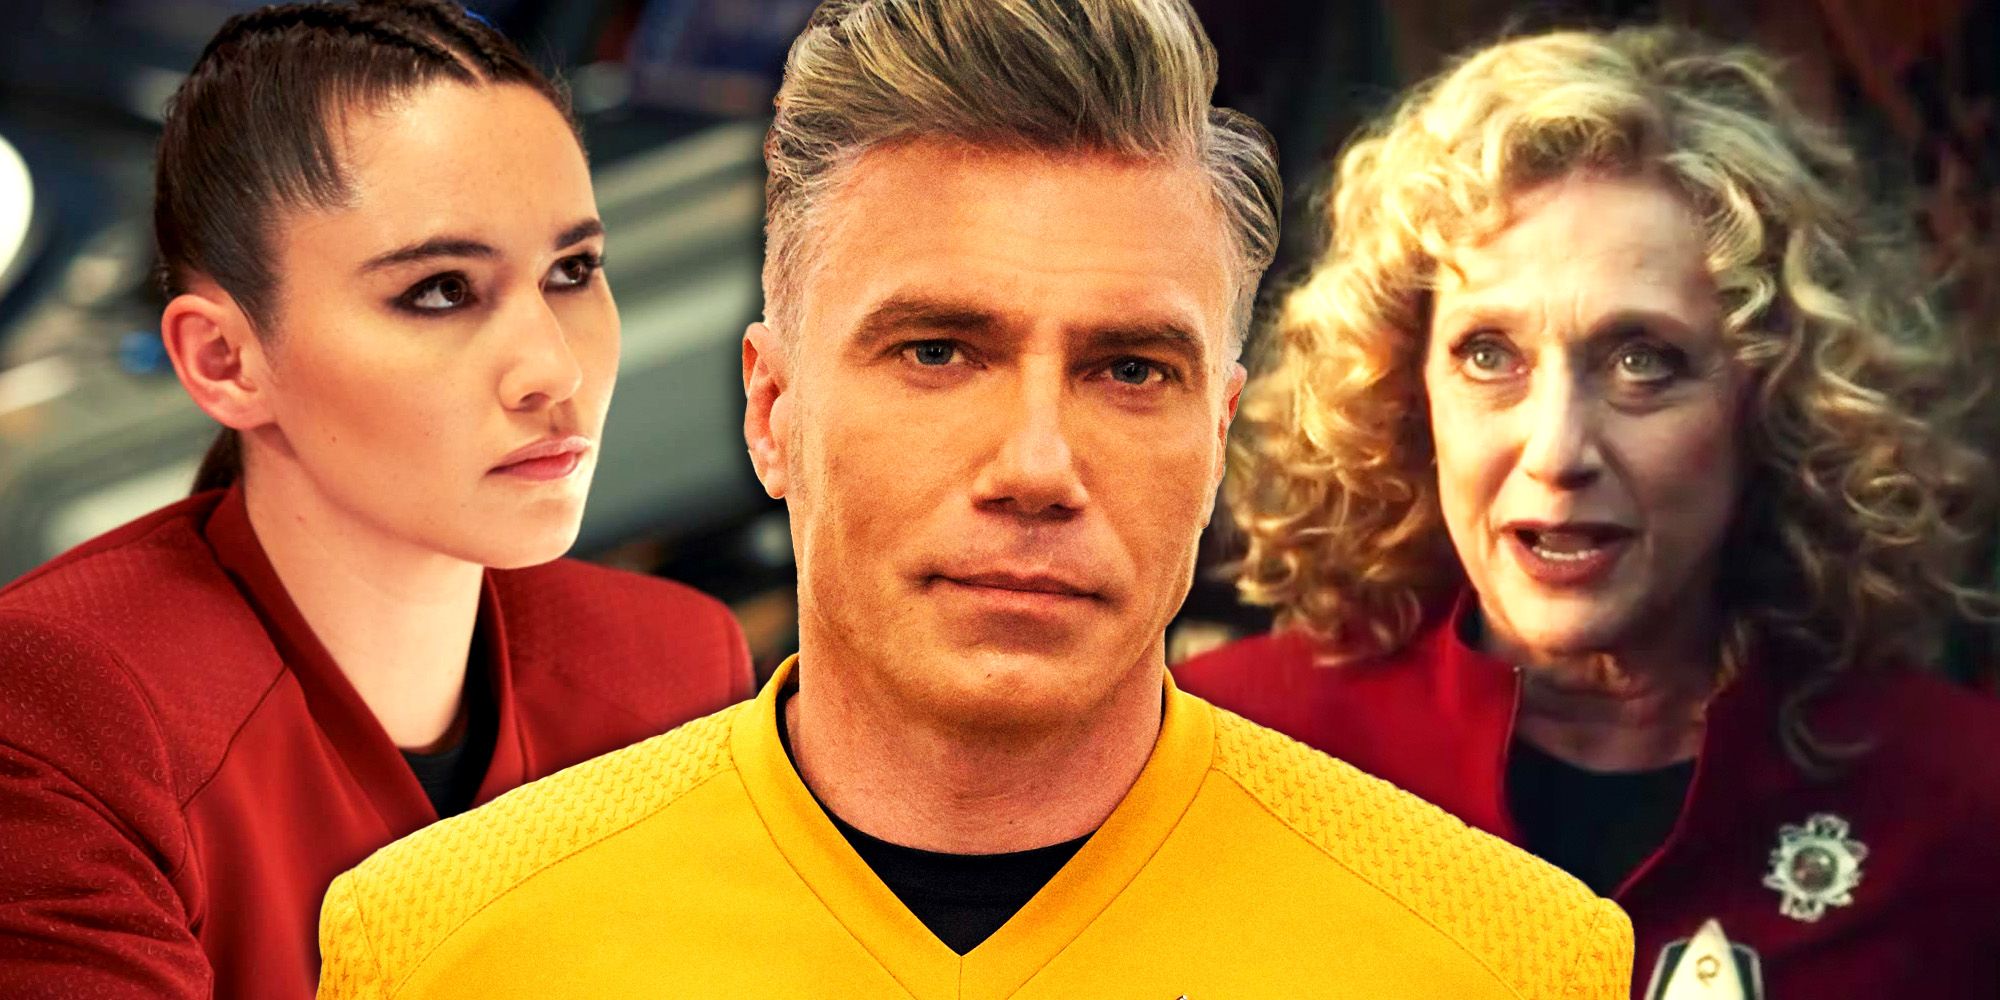 "Let's Make 20 A Year" Star Trek Executive Producer Wants More Strange